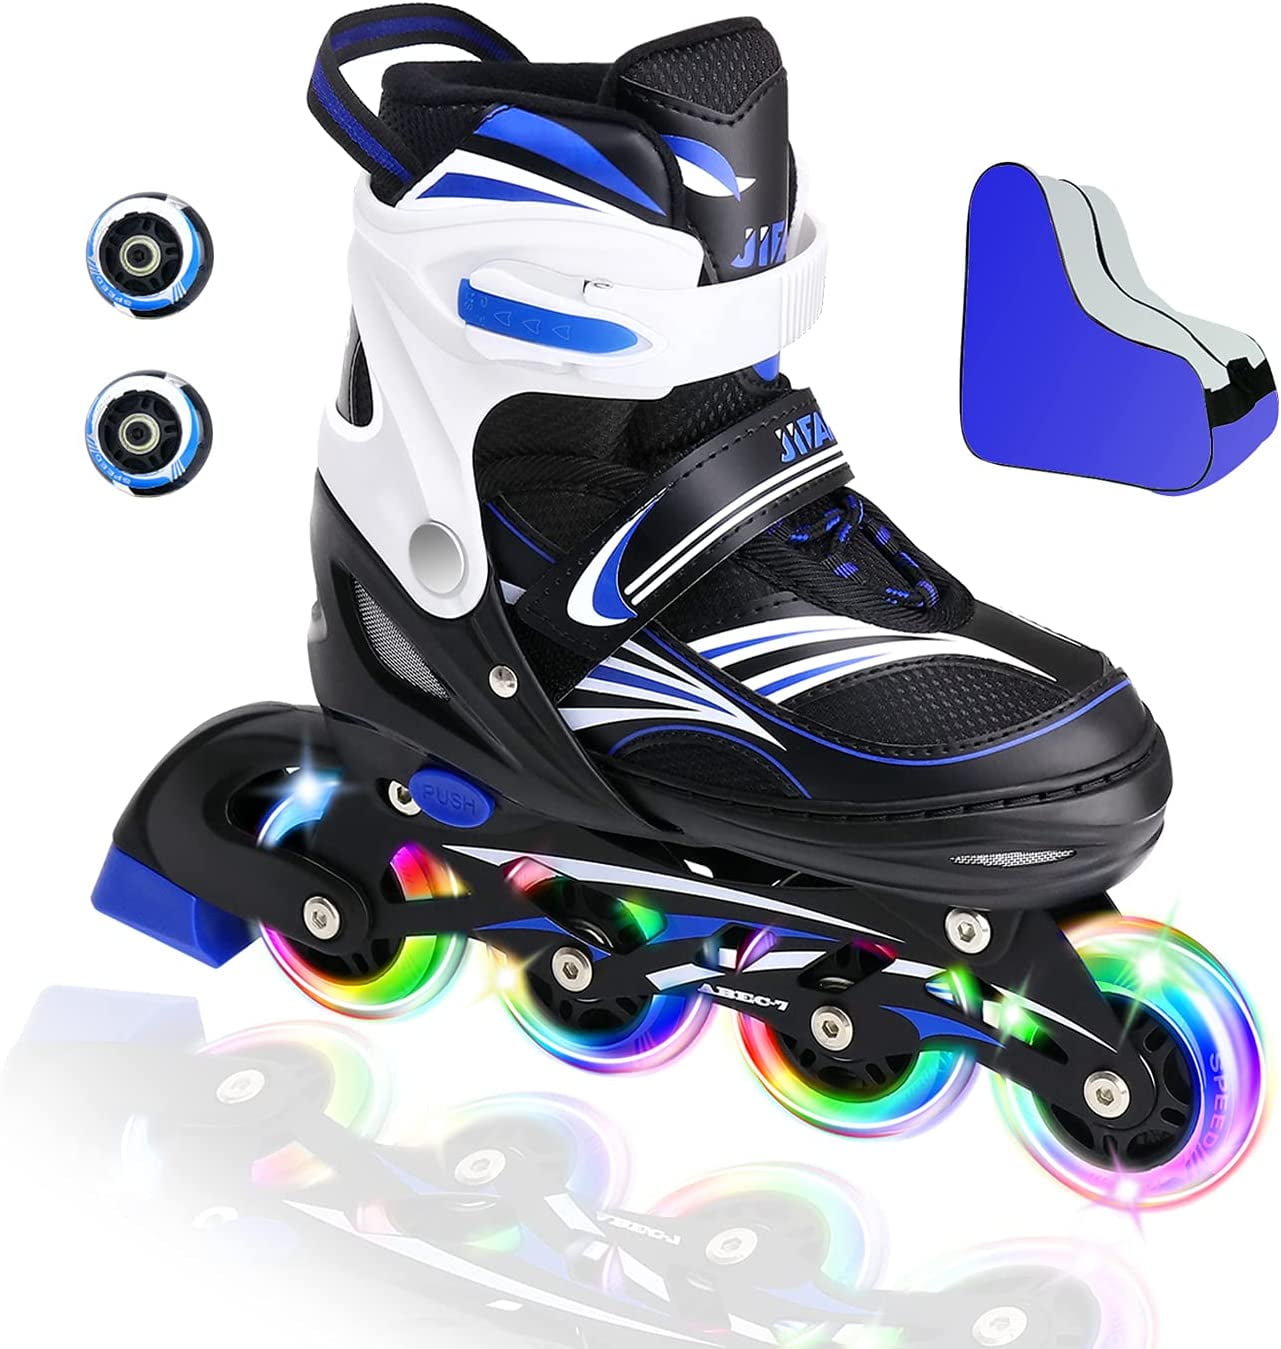 CAROMA New Inline Skates for Kids Adults Size5 6~11 Adjustable Roller Blades Hot